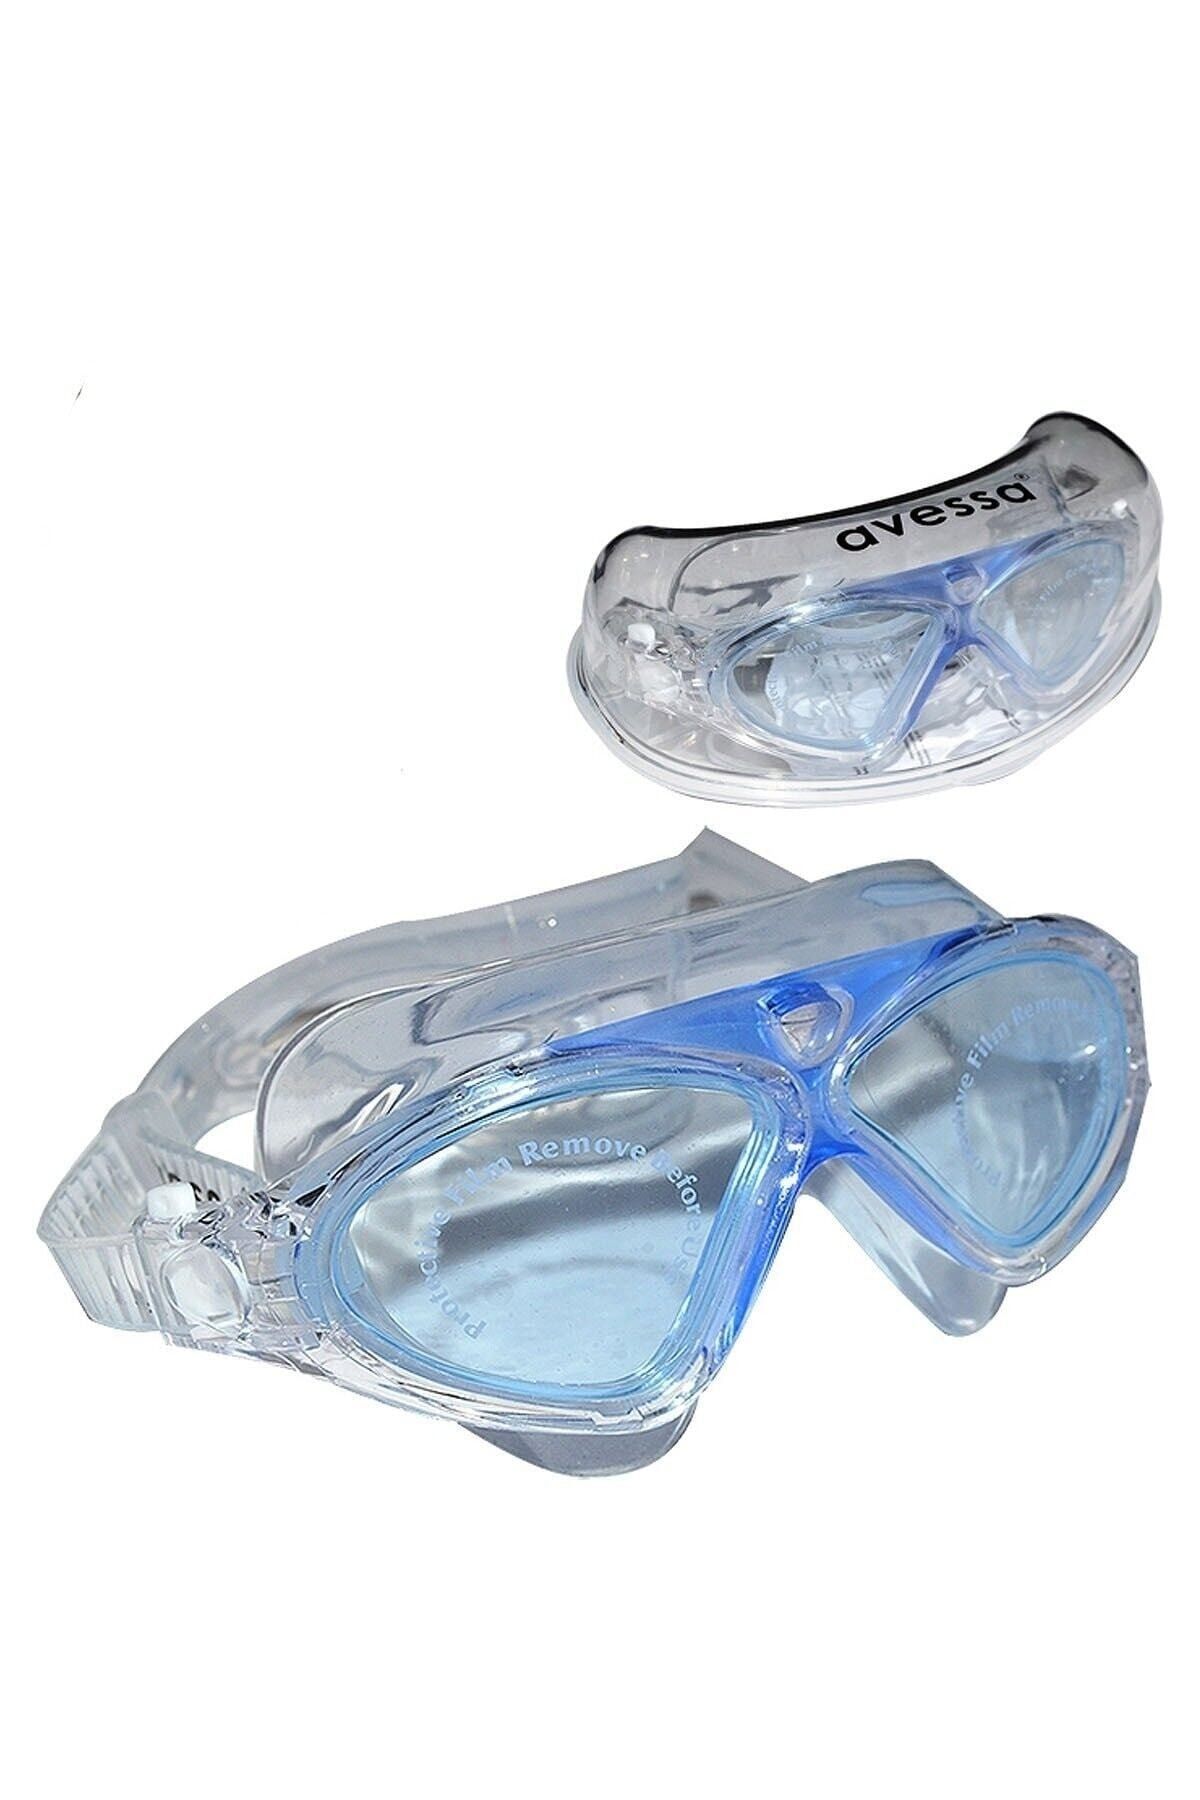 Avessa 9210 Çocuk Yüzücü Gözlüğü Mavi Avs-9210-mavi